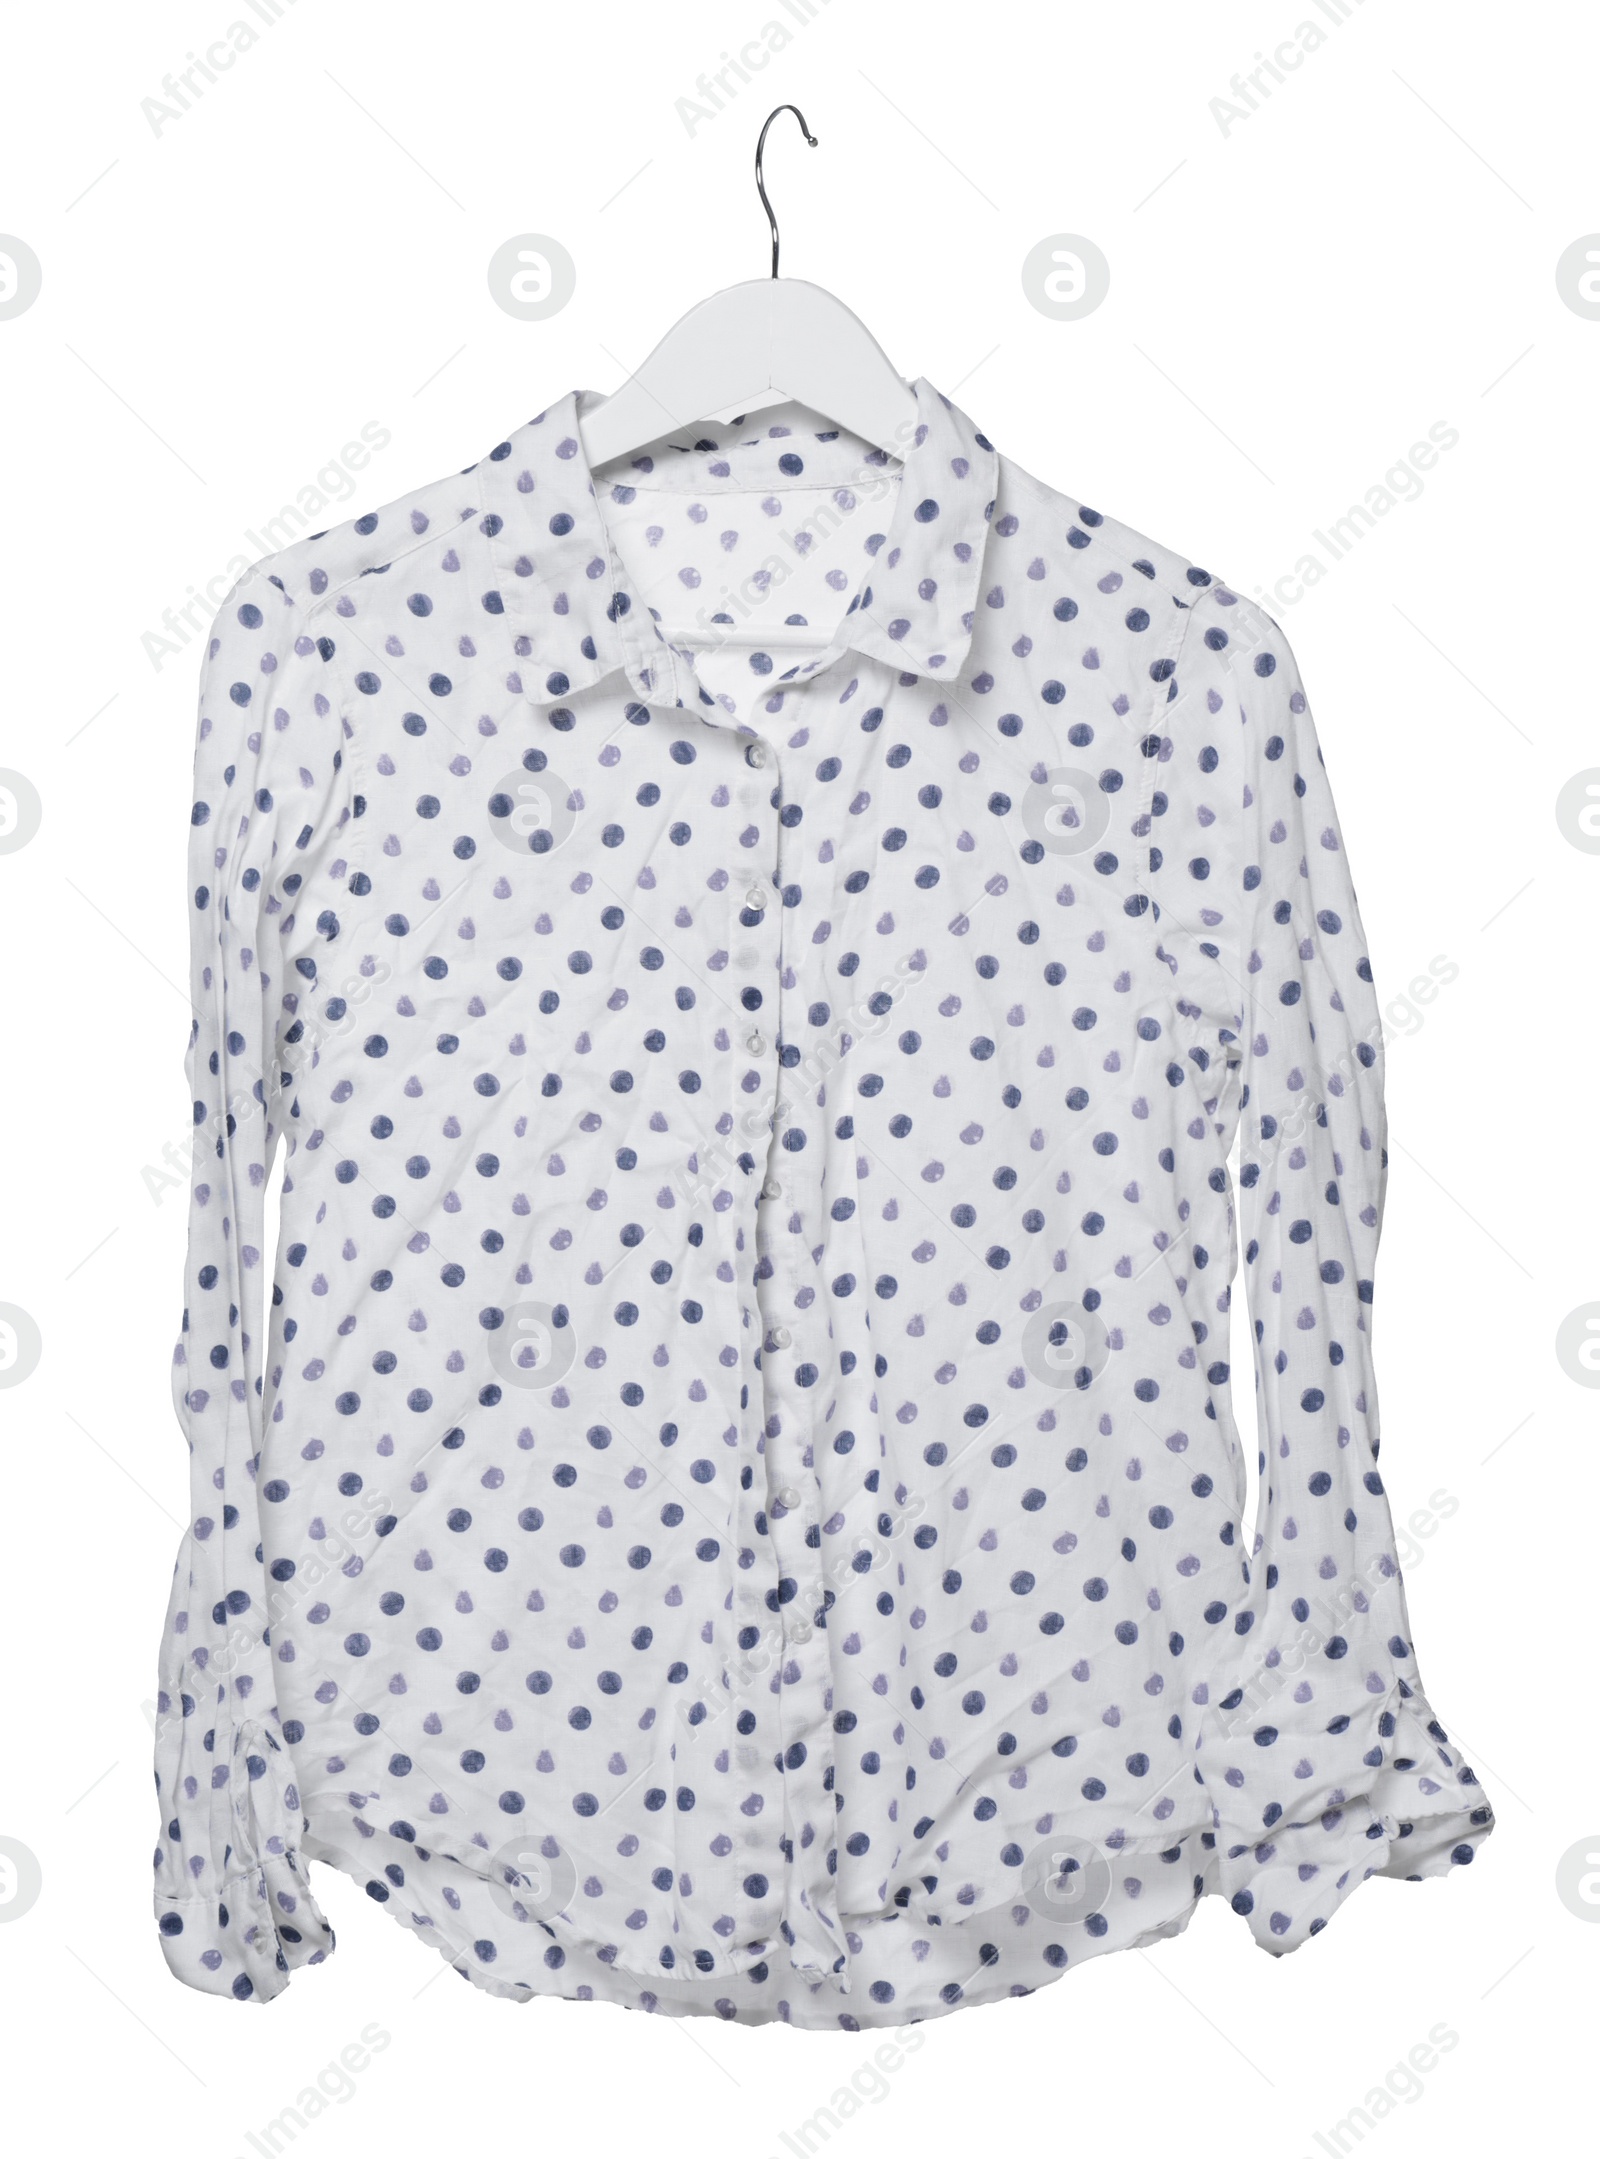 Photo of Crumpled polka dot blouse on hanger against white background